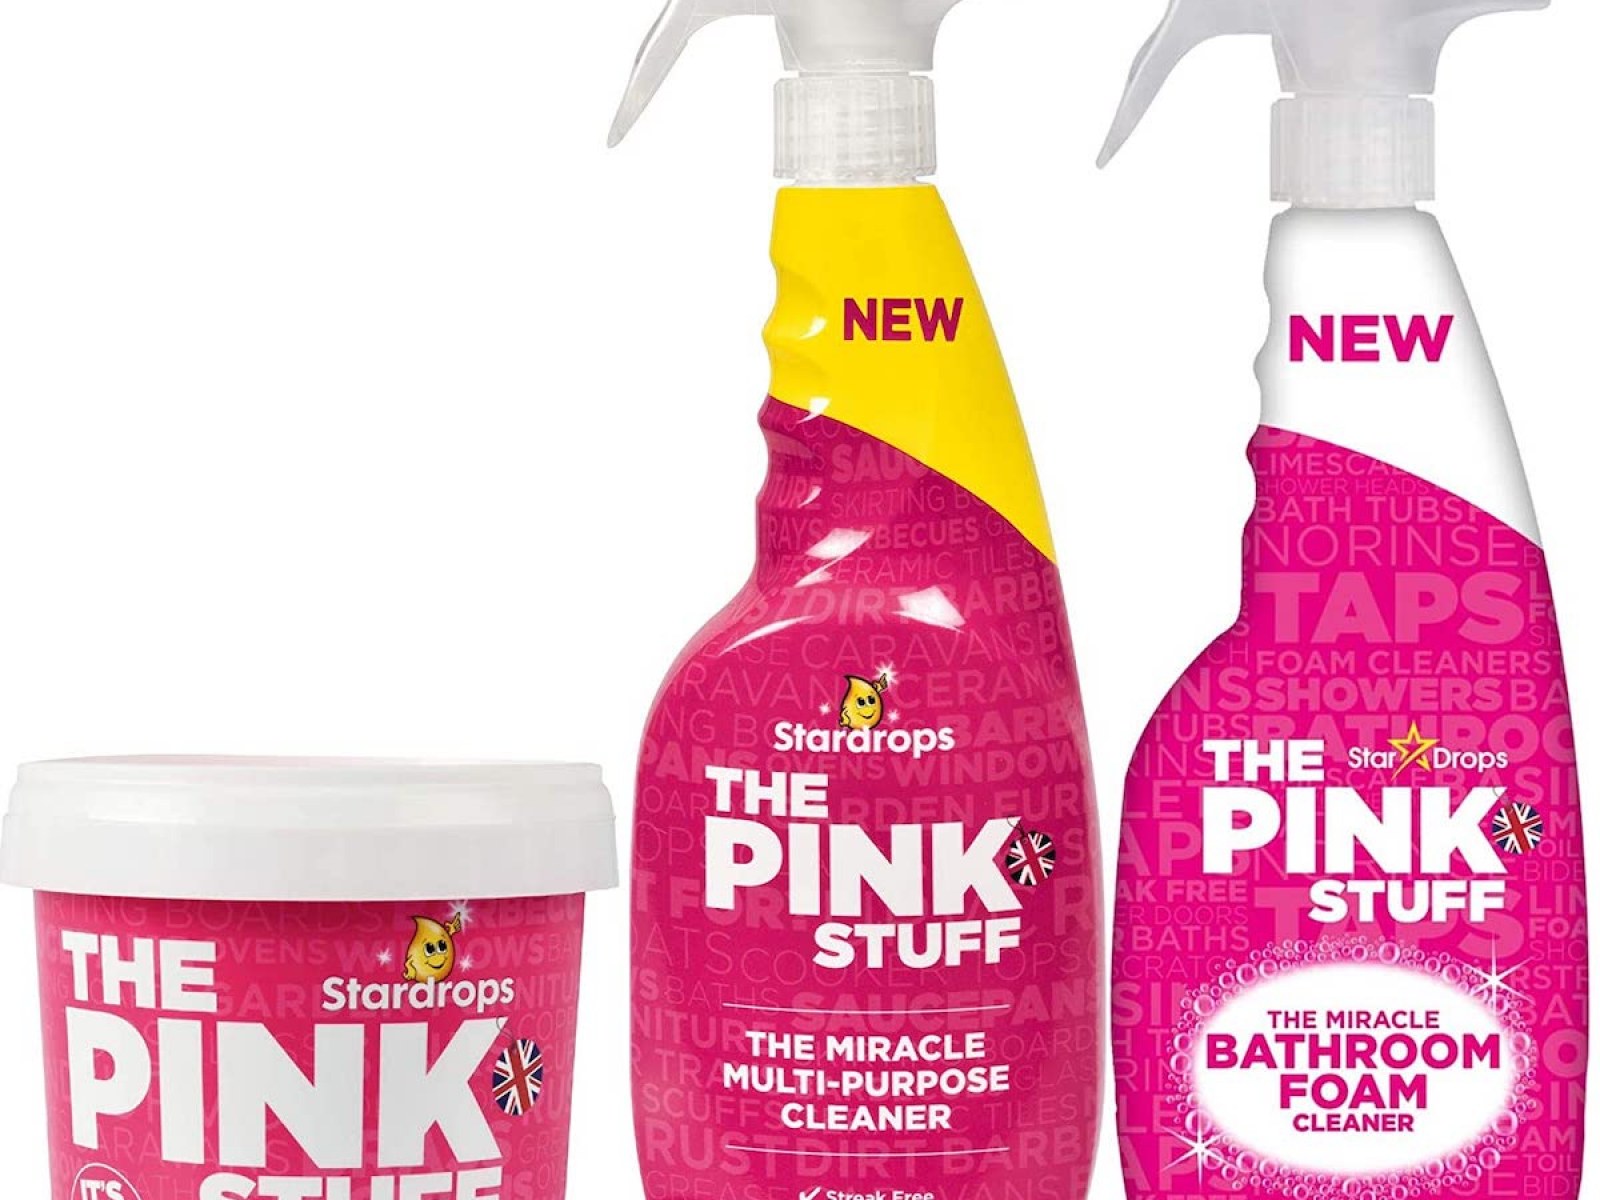 https://d.newsweek.com/en/full/1843987/best-cleaning-products-pink-stuff.jpg?w=1600&h=1200&q=88&f=606ff42b6d677ad27efbd50b826ca7e5